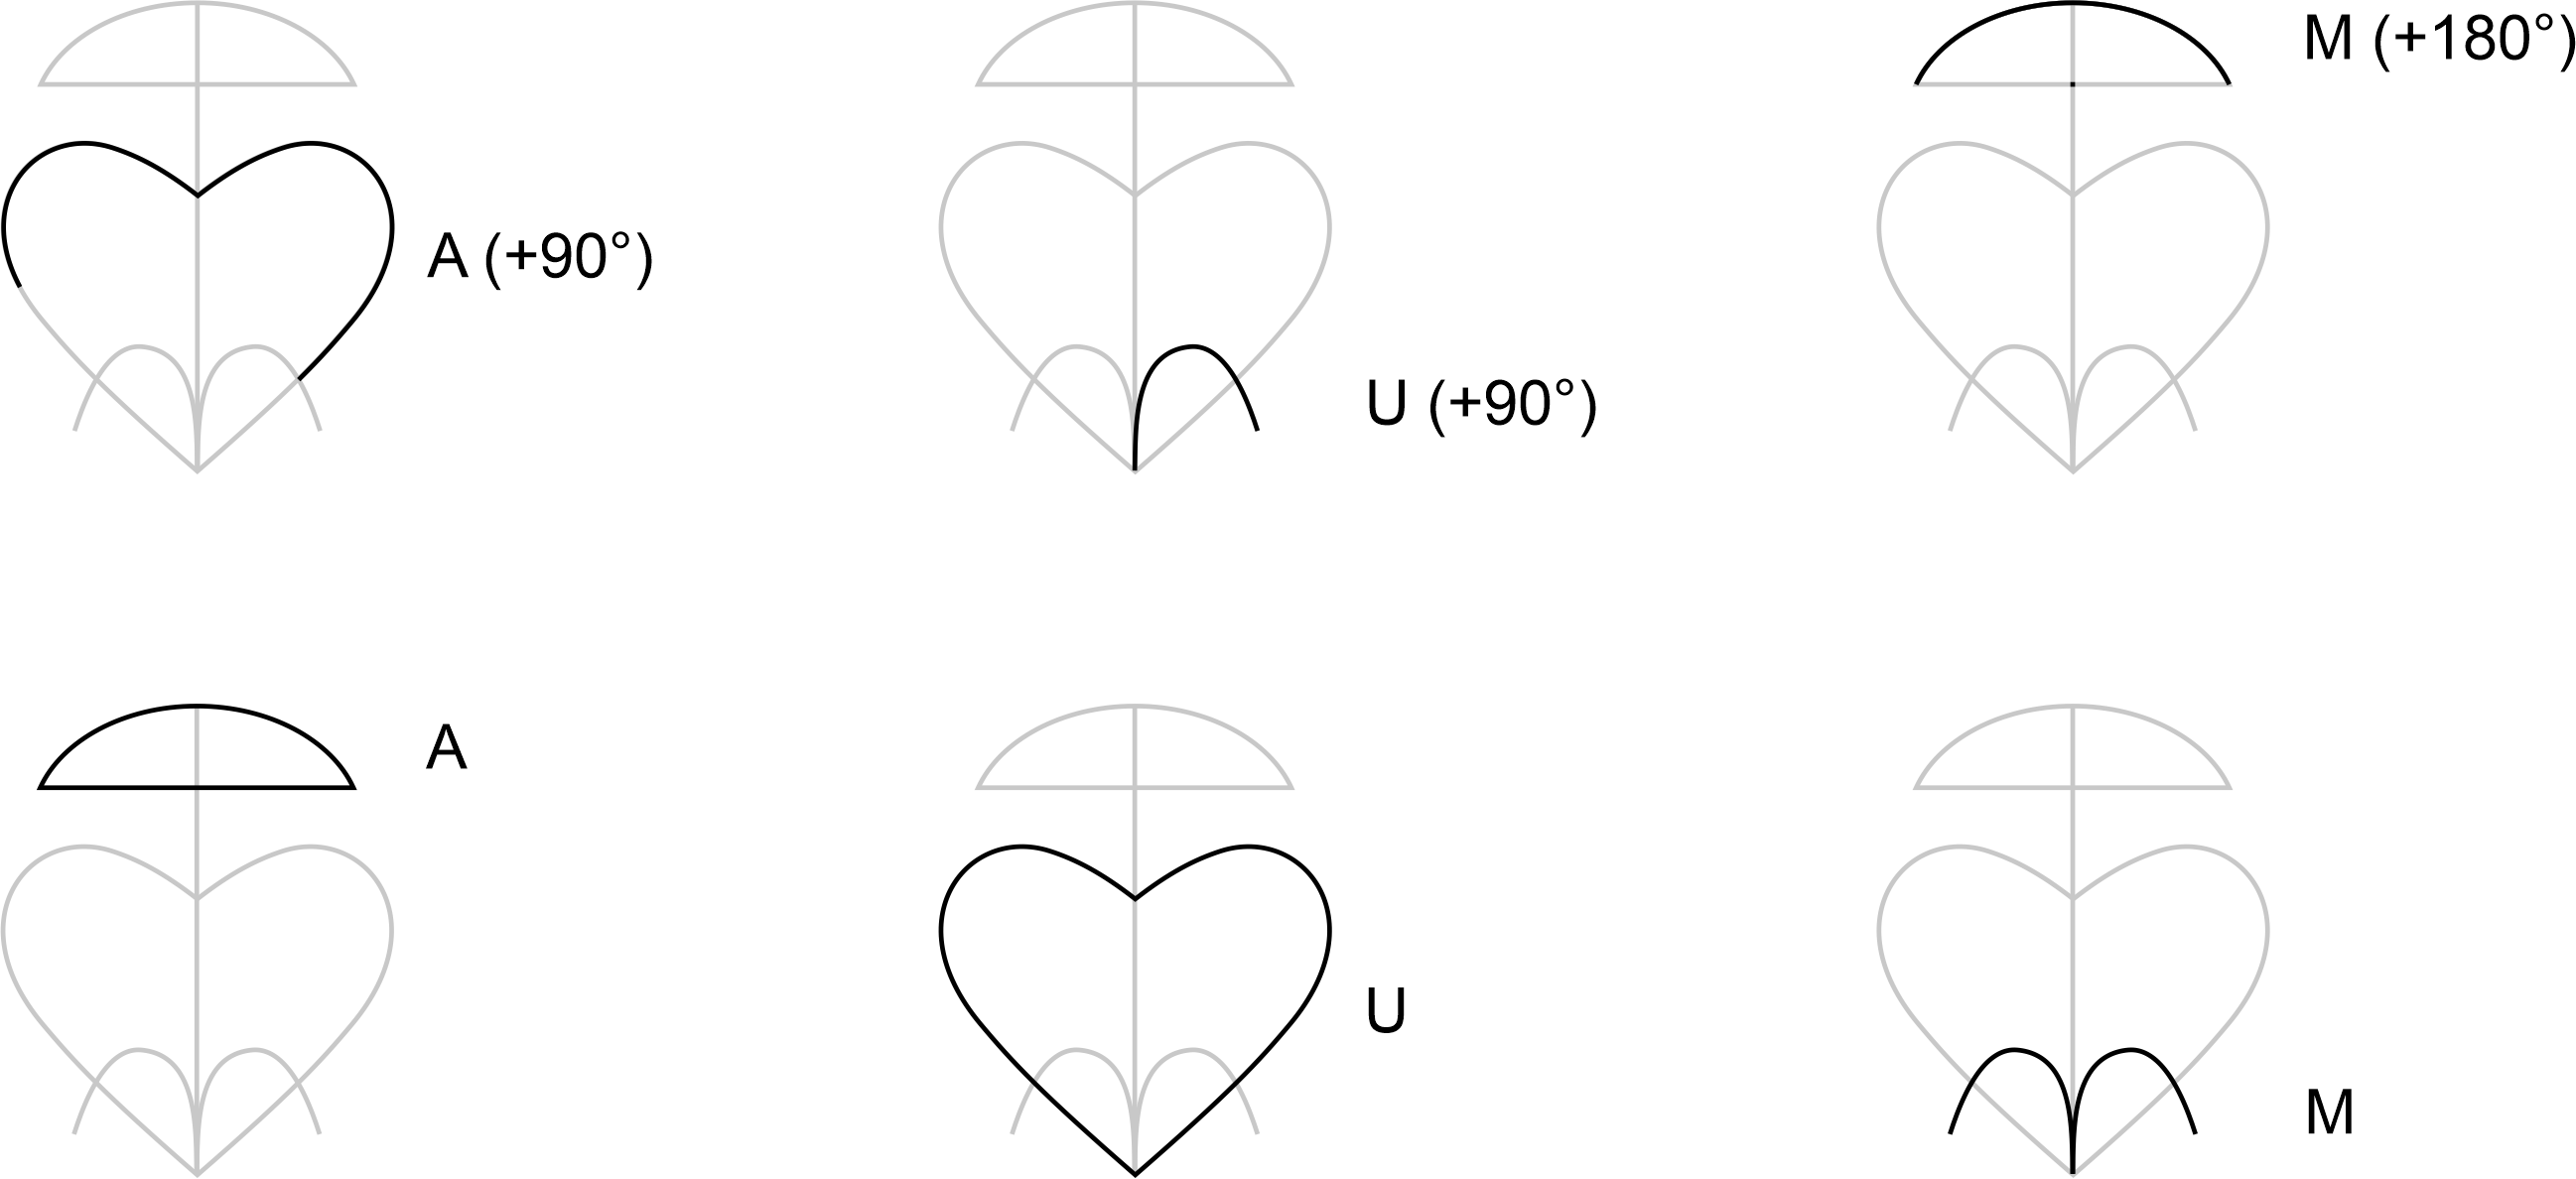 The Mayil hieroglyph and 'aum'